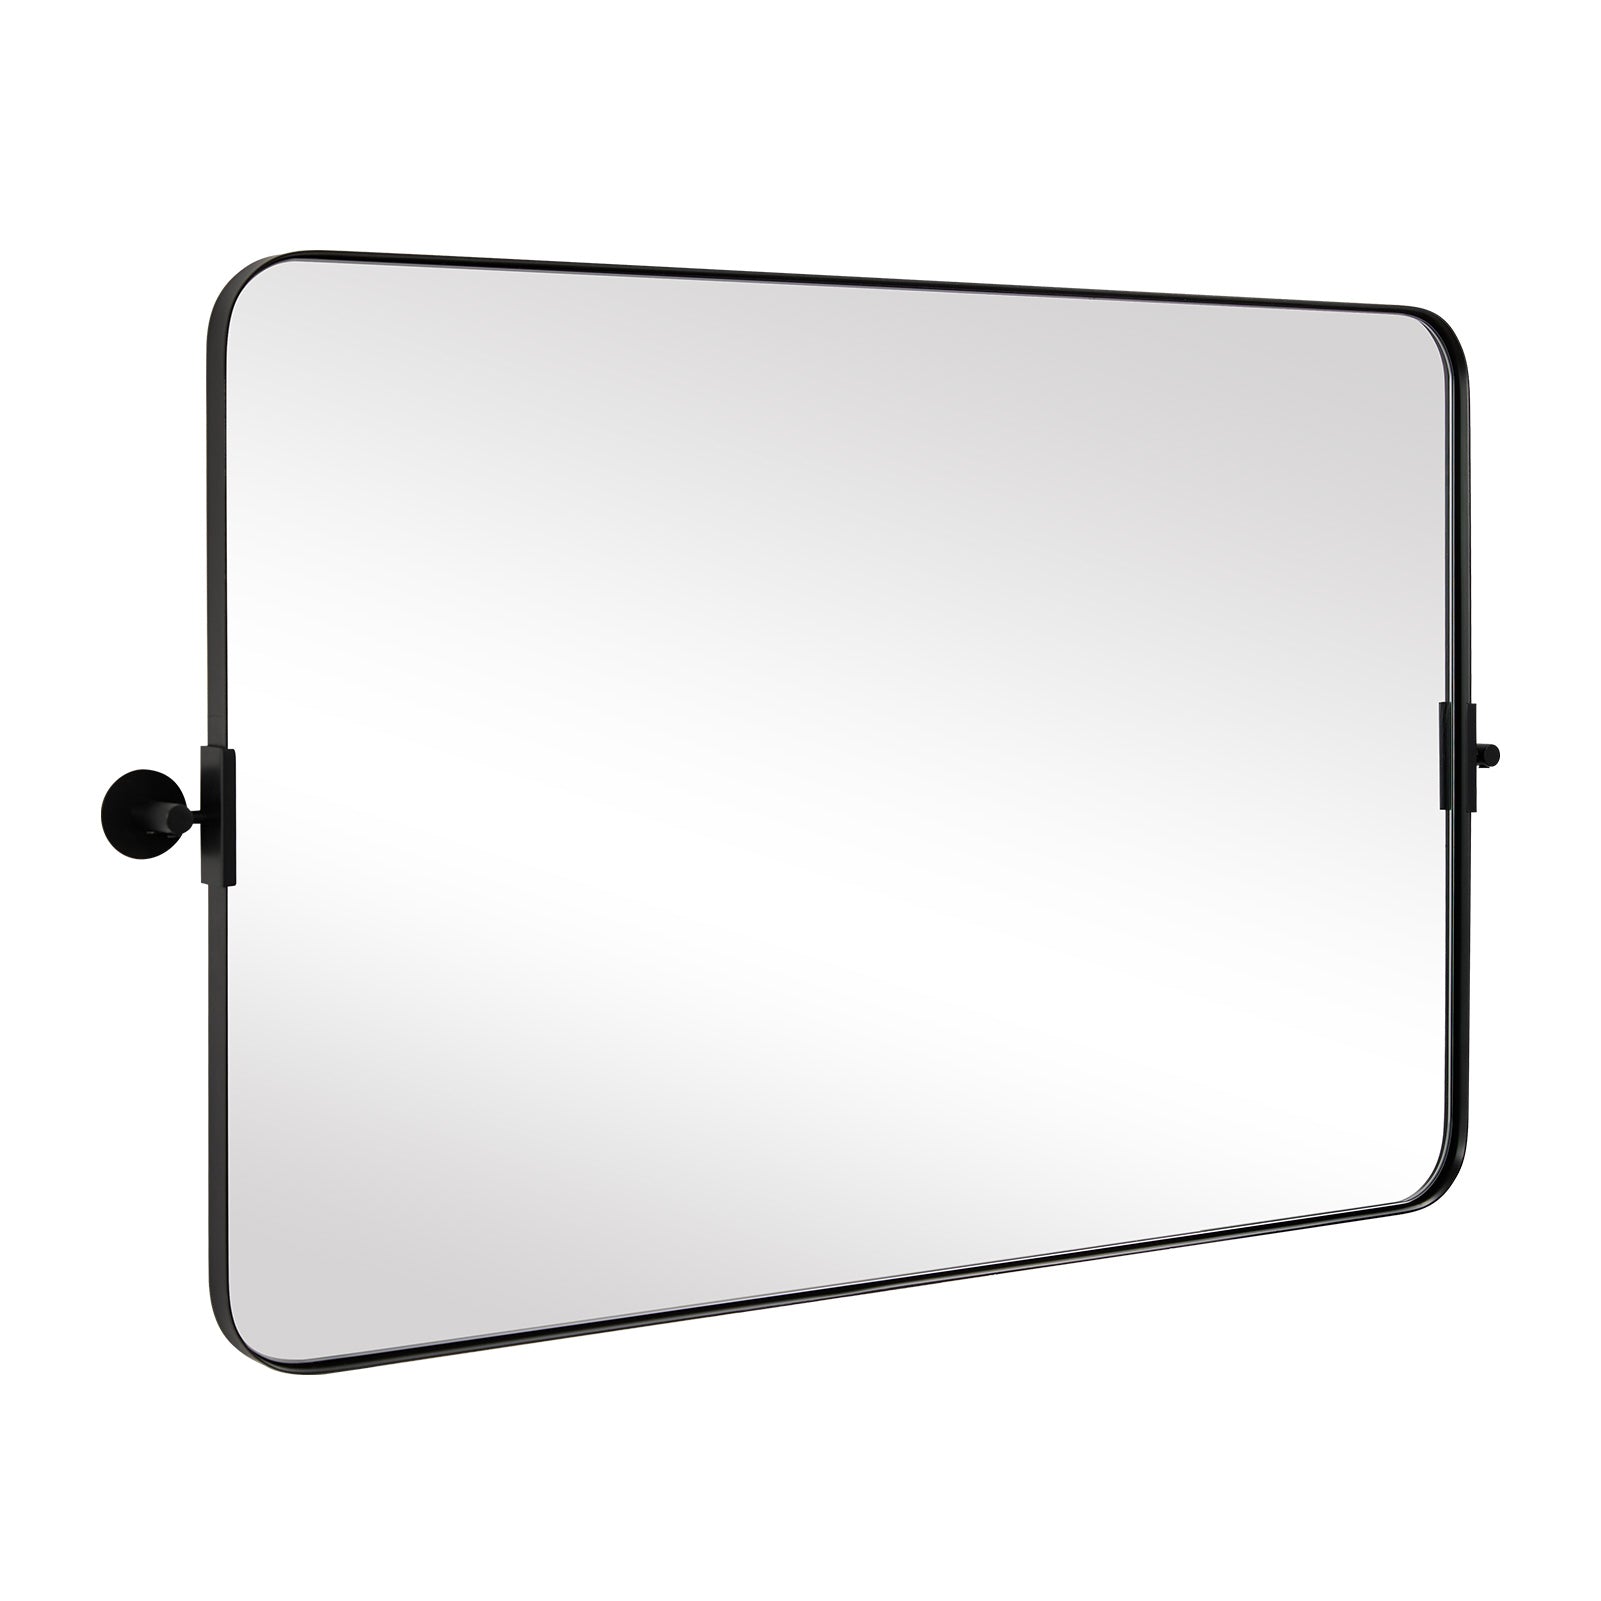 Modern Tilting Pivot Bathroom/Vanity Mirror Rounded Rectangle Mirror Hangs Horizontal